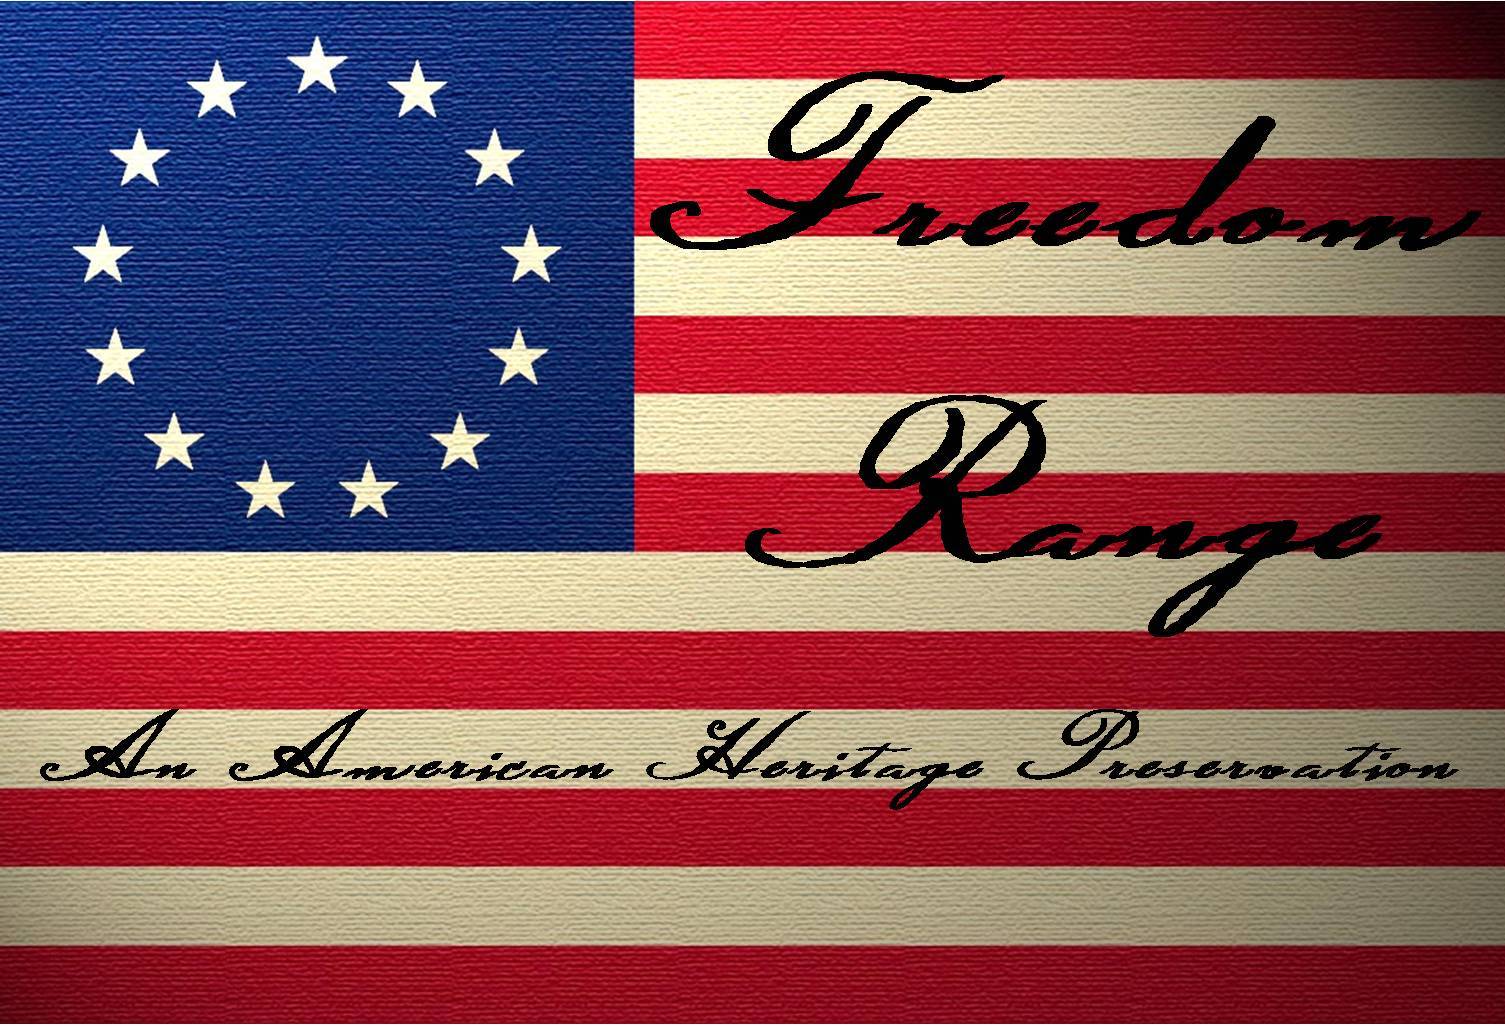 Freedom Range: An American Heritage Preservation! 